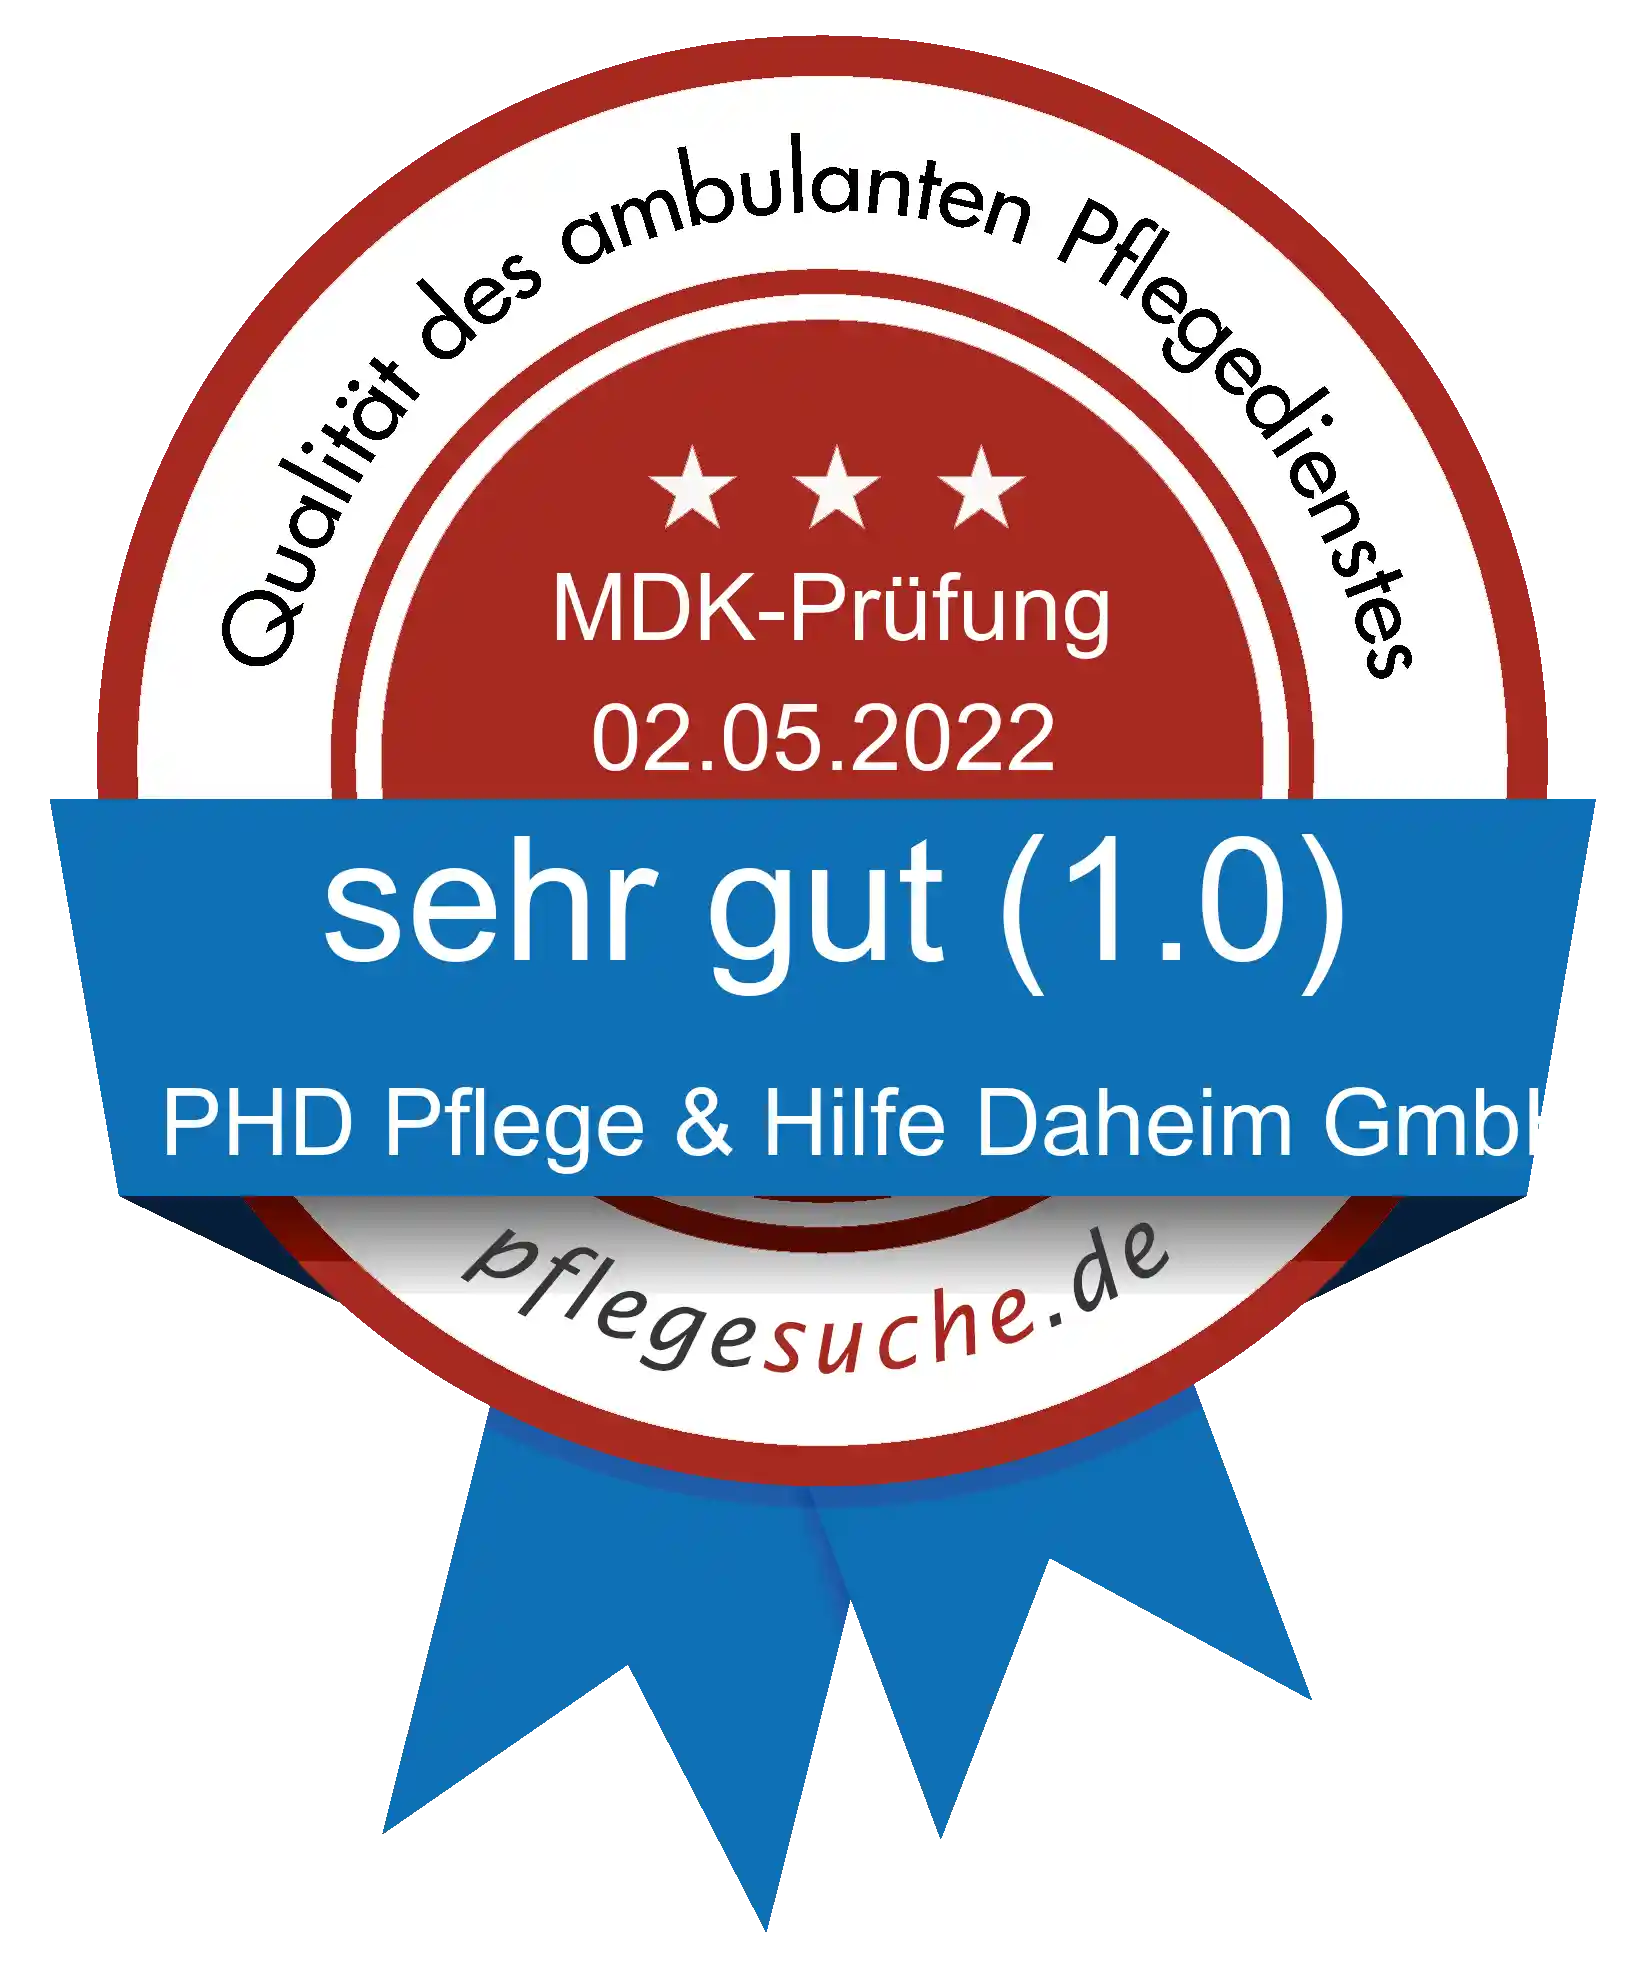 Siegel Benotung: PHD Pflege & Hilfe Daheim GmbH